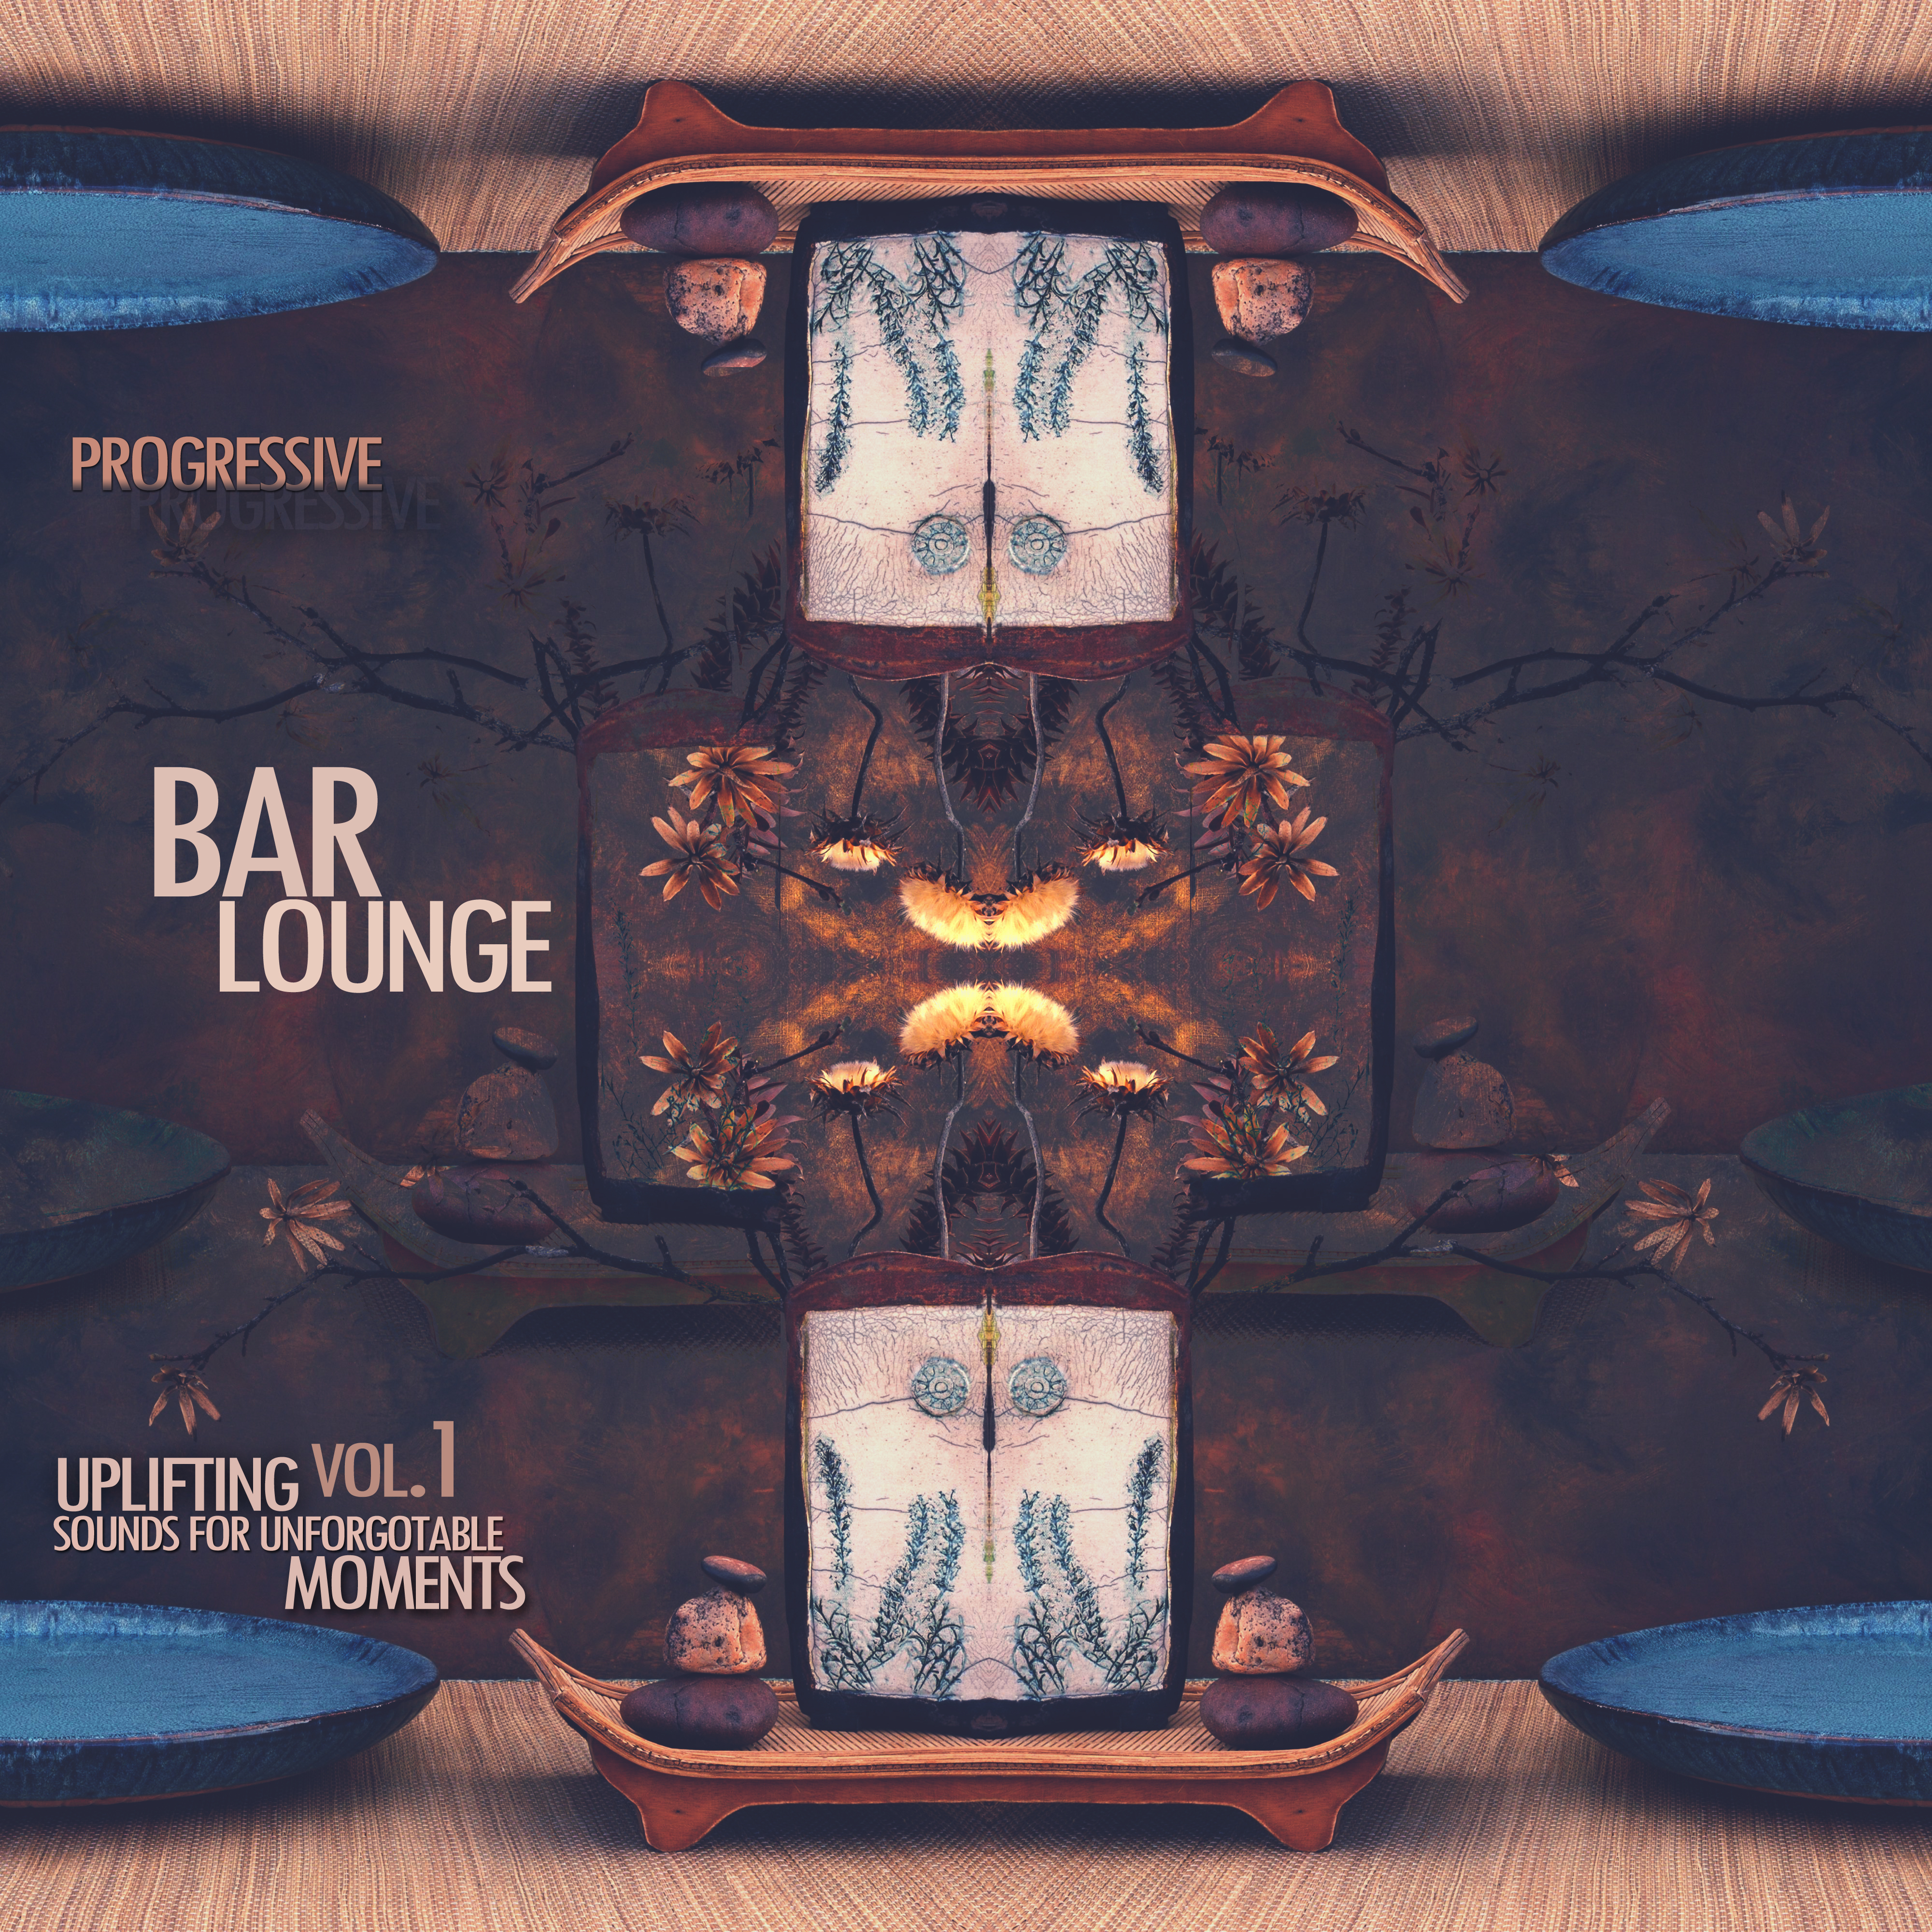 Progressive Bar Lounge, Vol. 1 (Uplifting Sounds for Unforgotable Moments)